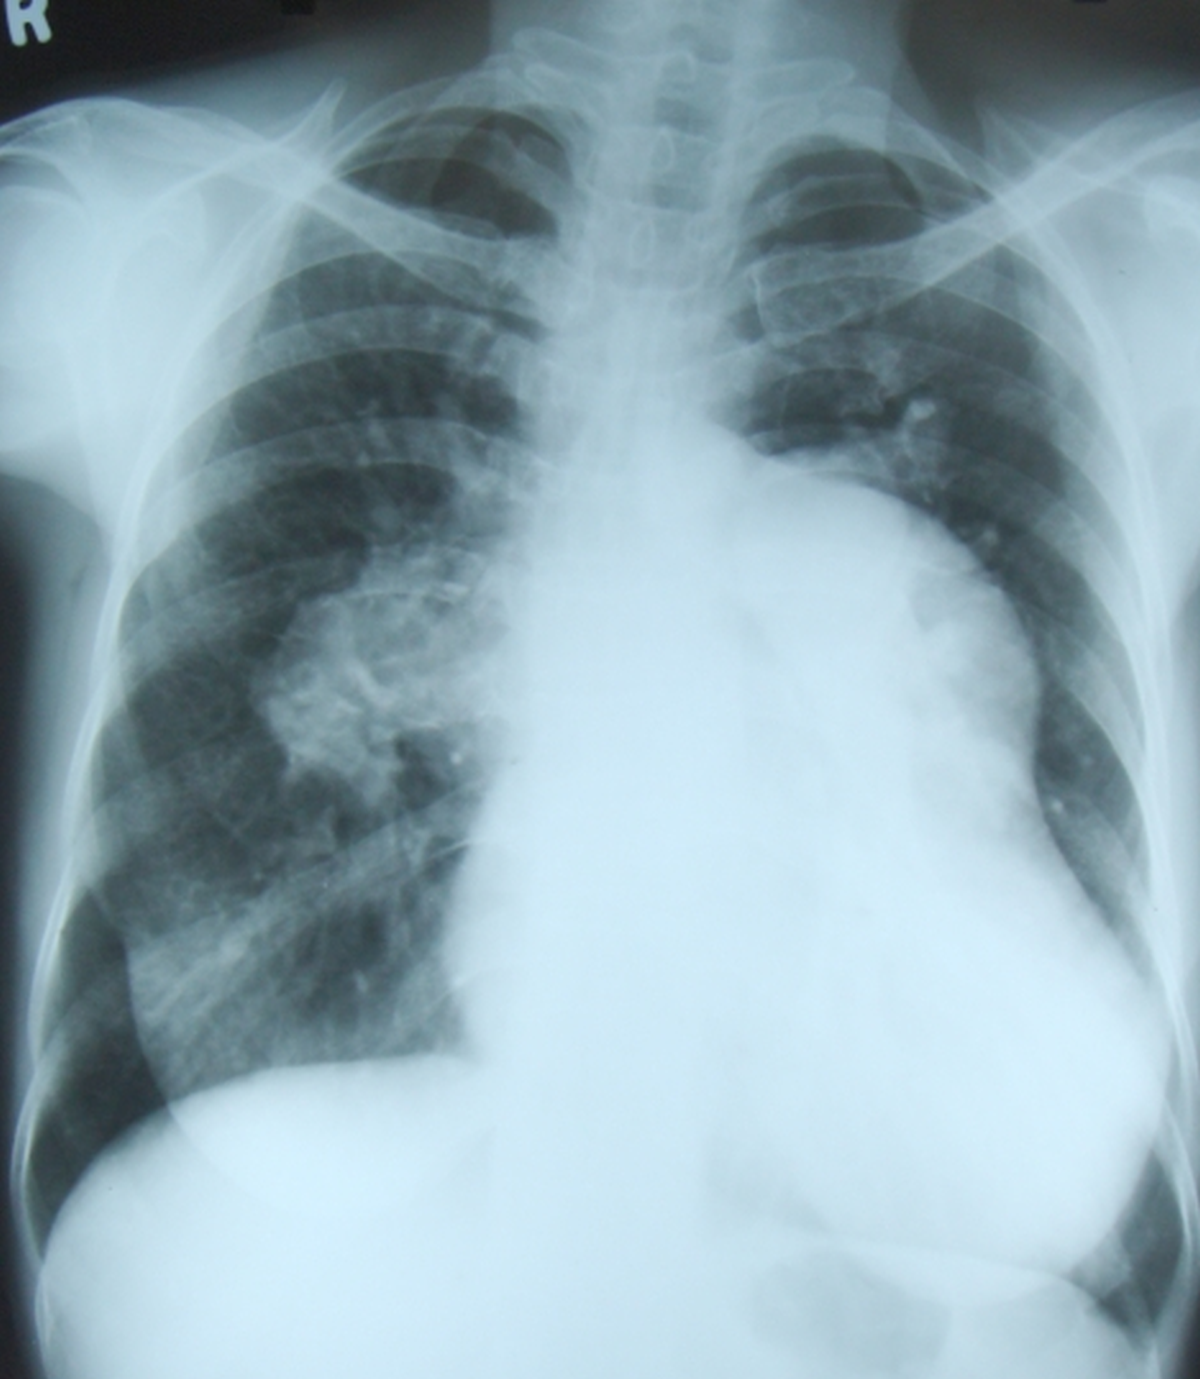 Aneurysmal dilatation of the main pulmonary artery